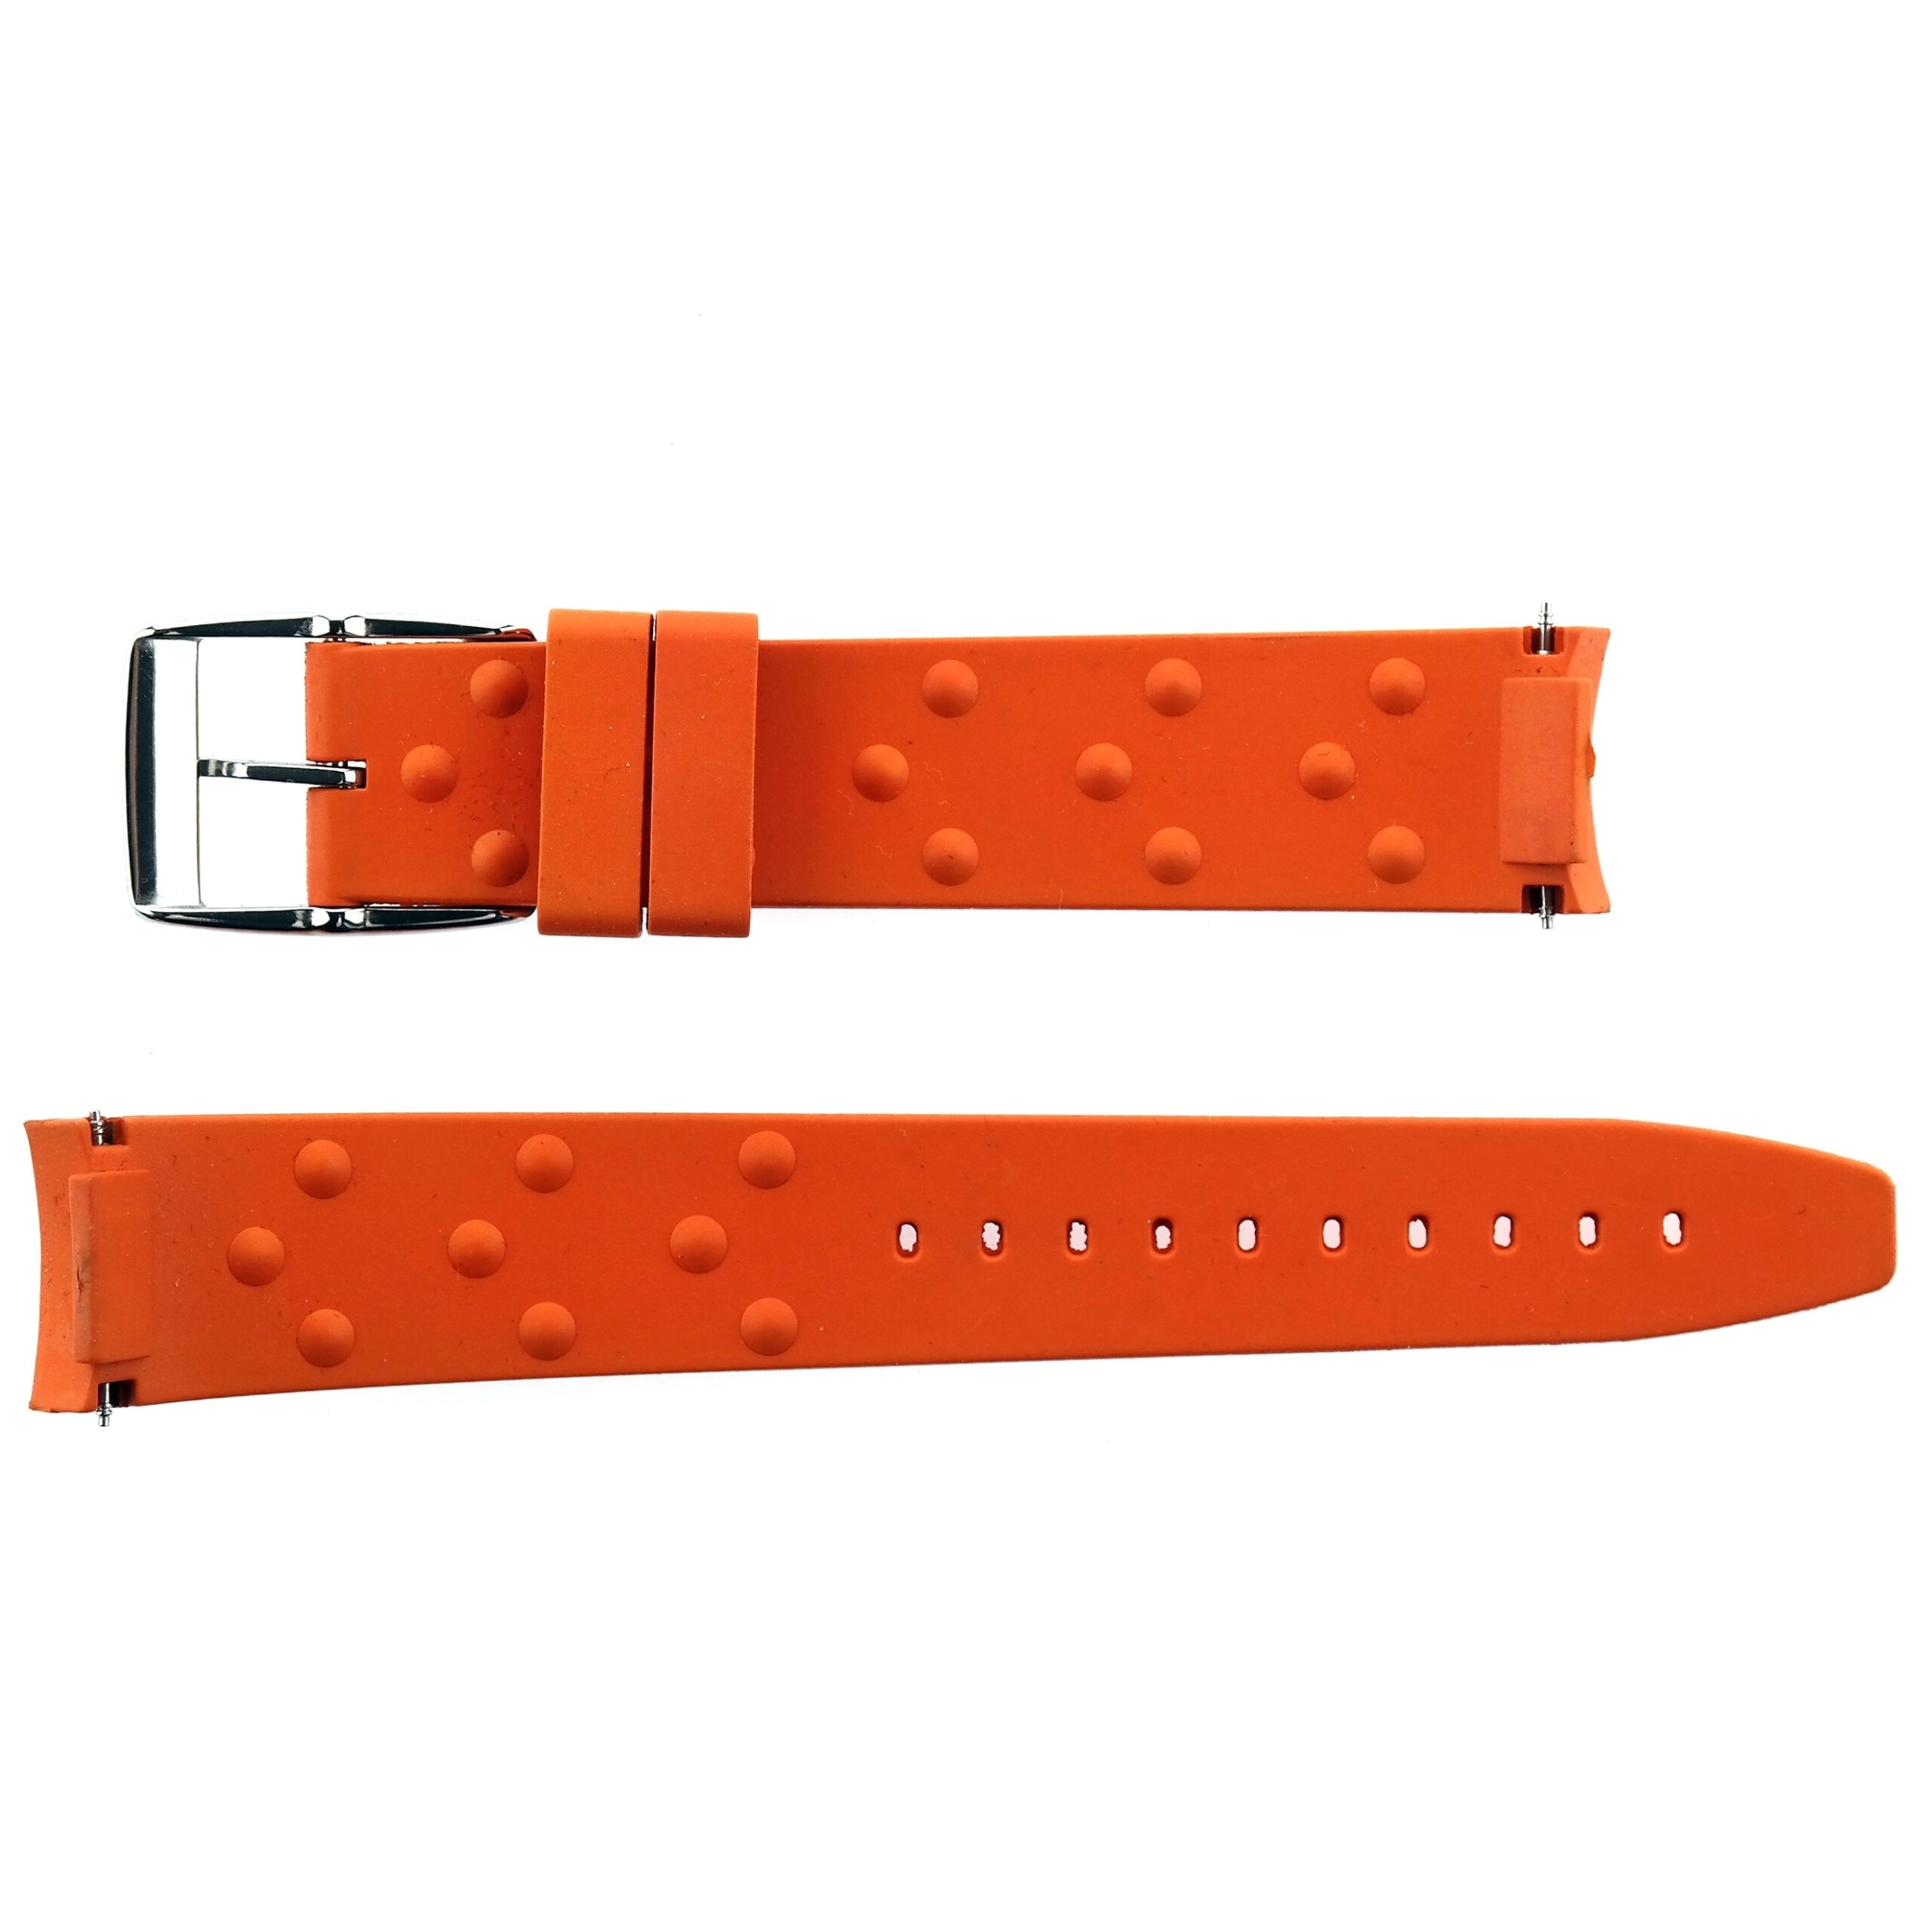 DOXA - SUB - Rubber Watch Strap with Buckle - 20/18 90/130 - Orange